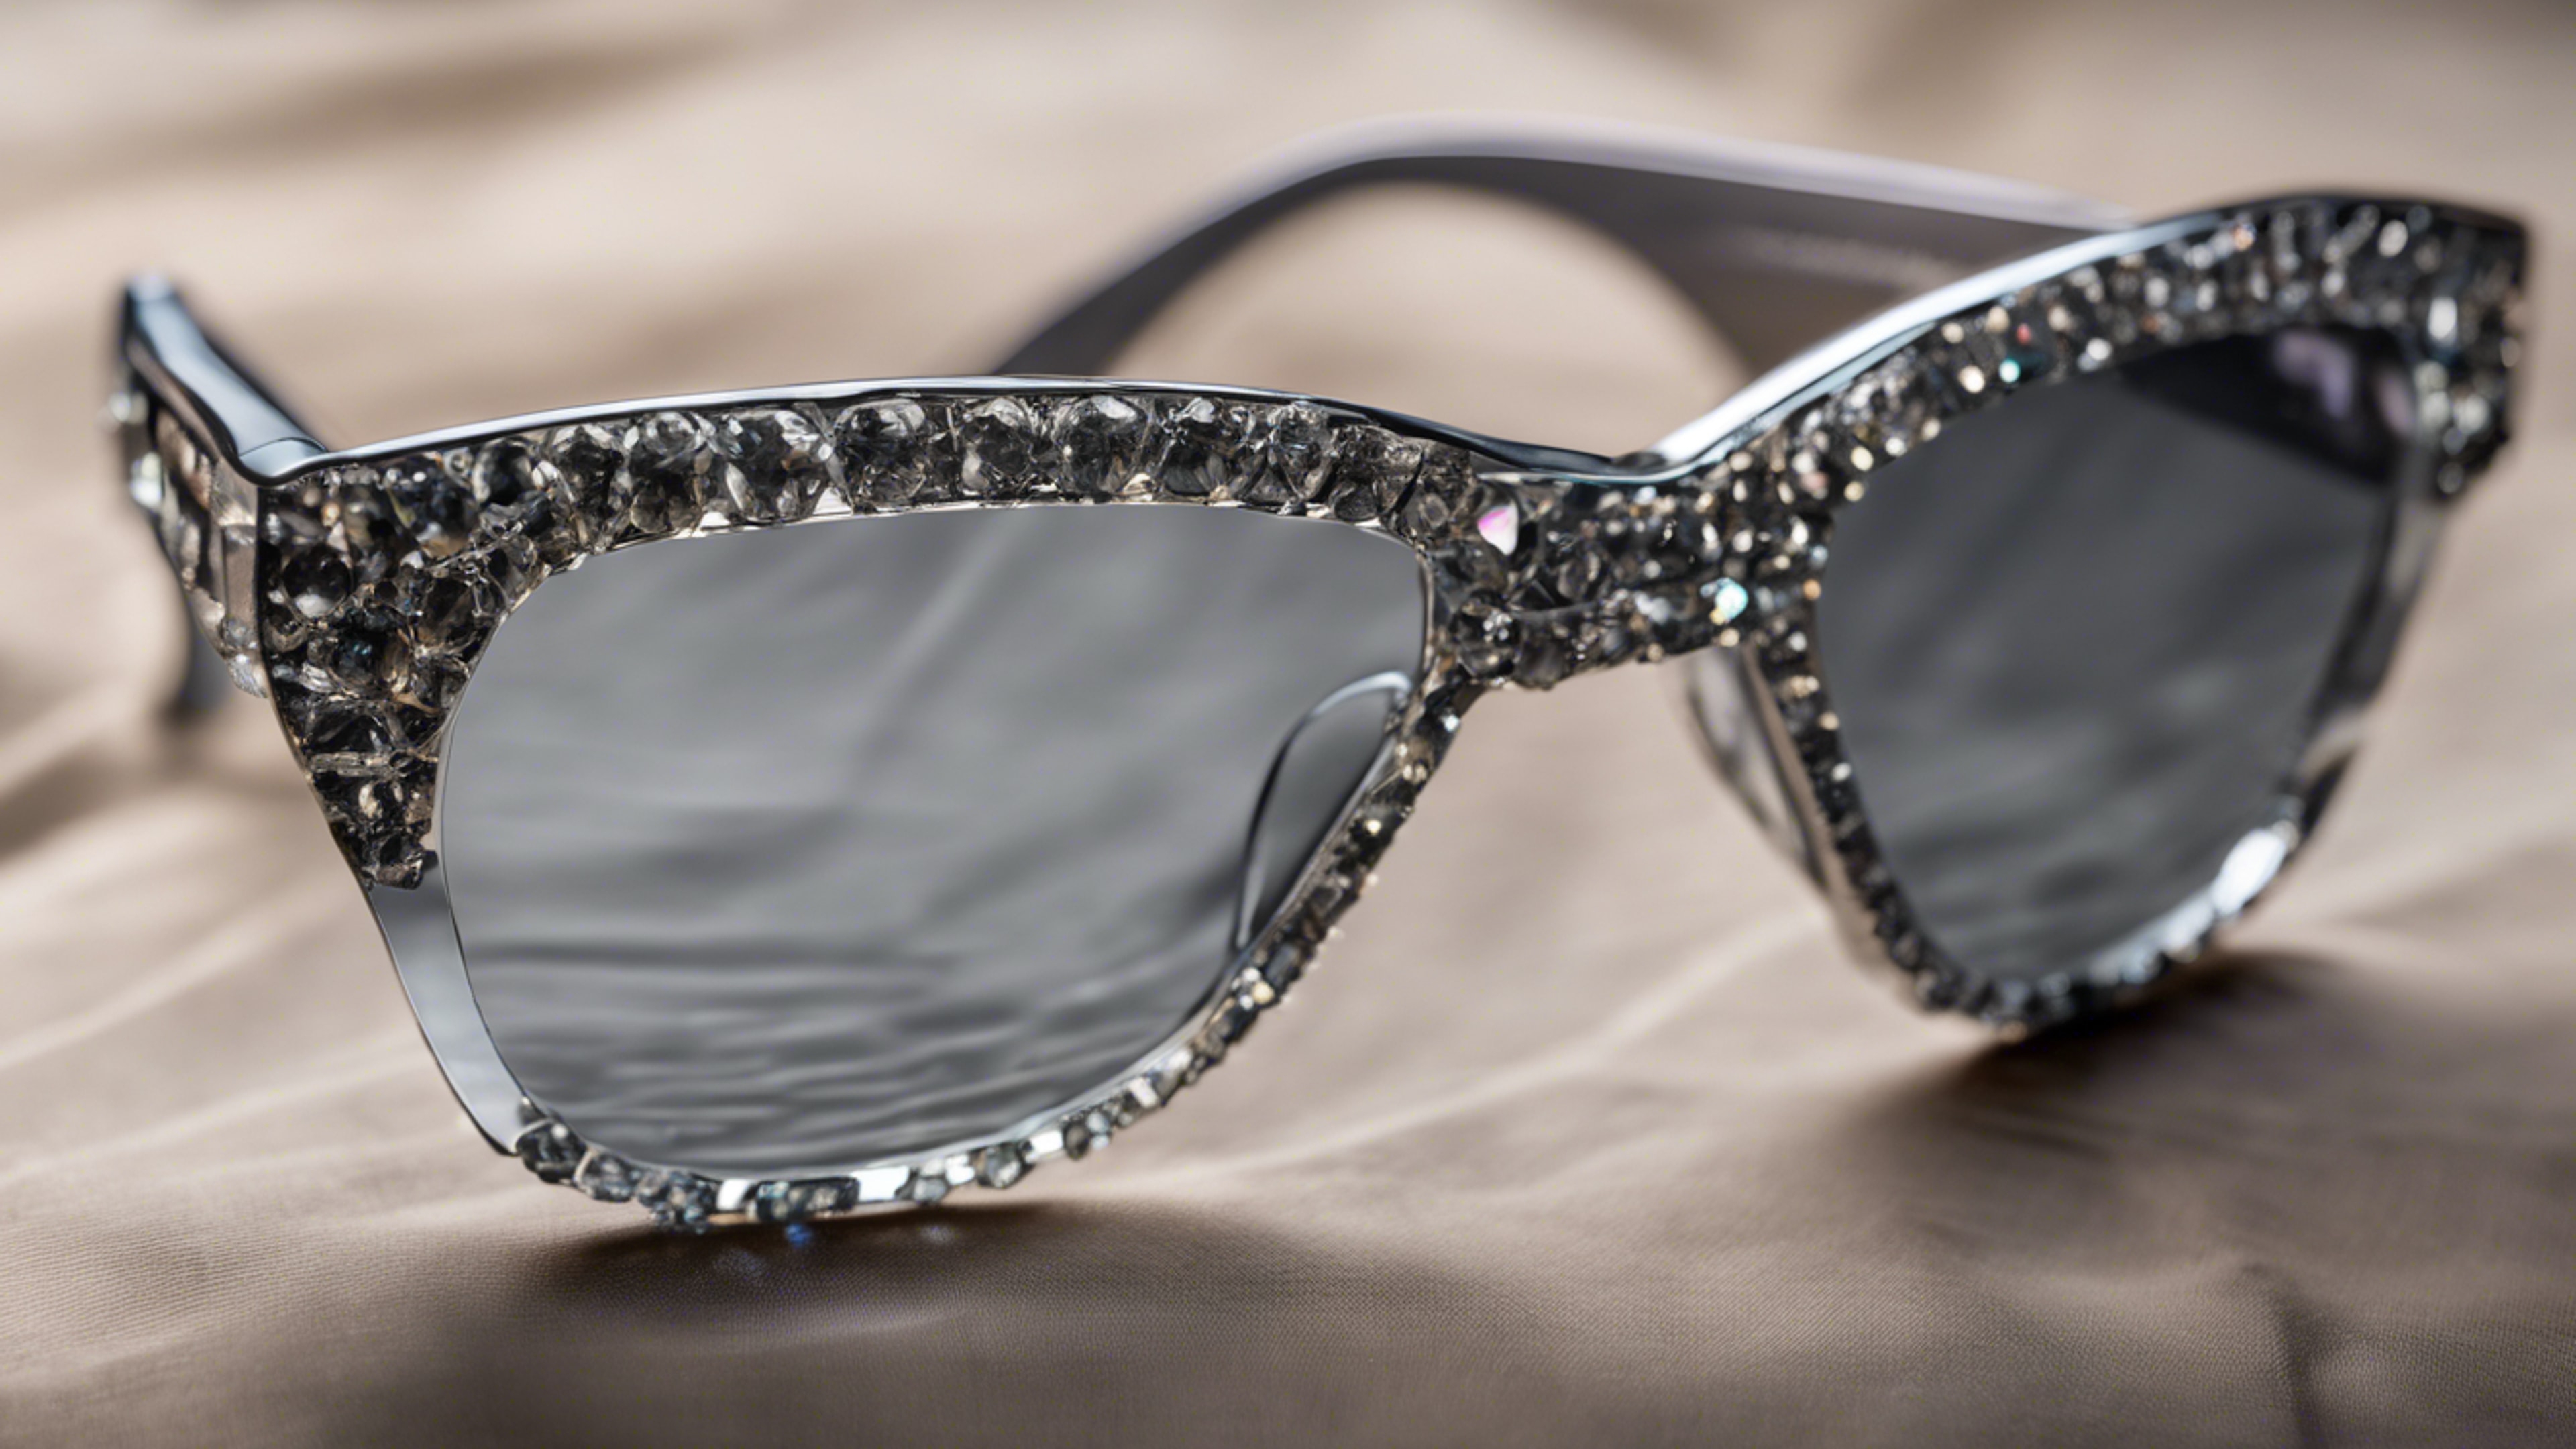 A pair of gray diamond encrusted glasses, epitomizing luxury and status. Tapeta[6d0b74d92658455f9dbd]